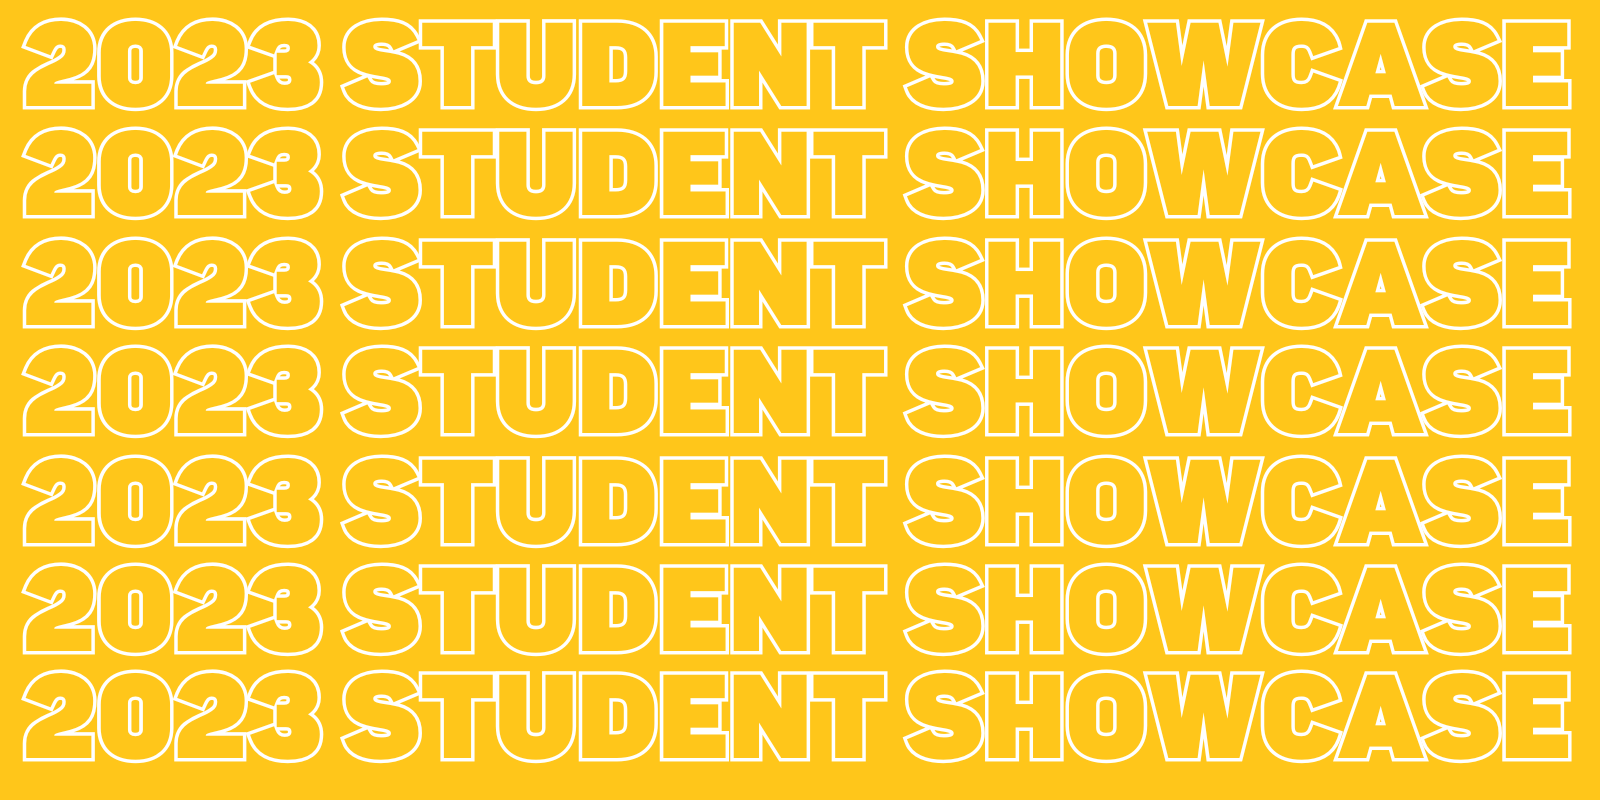 Students Showcase